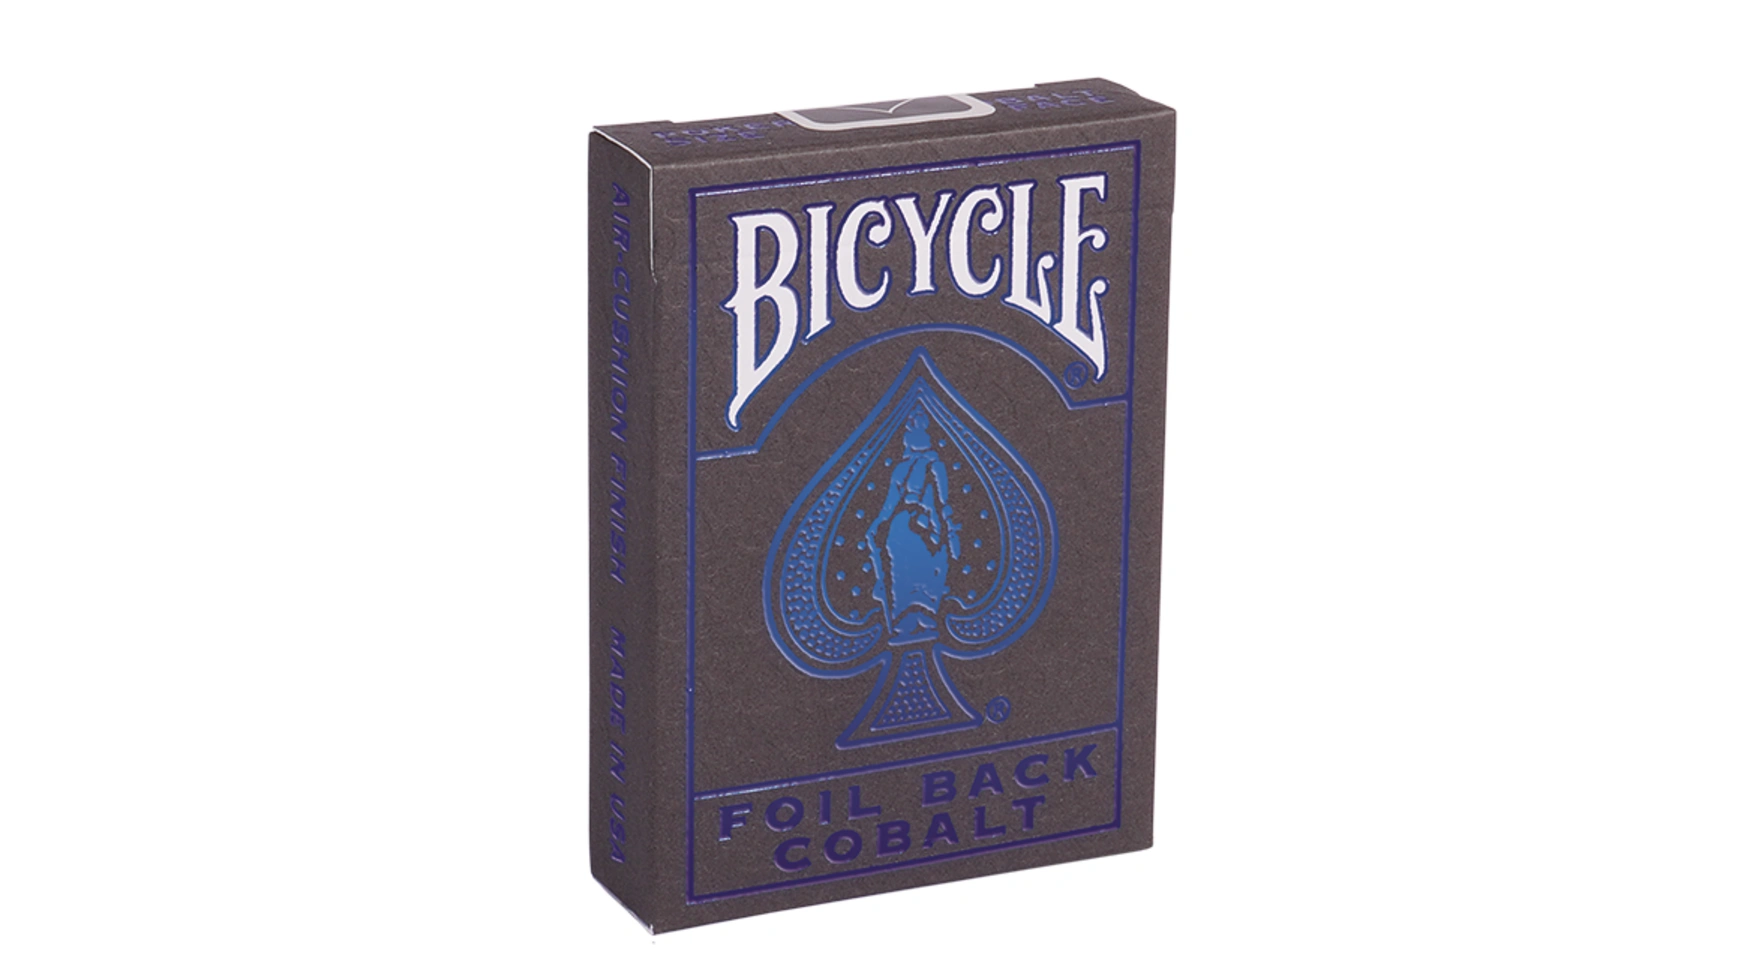 Bicycle игральные карты Metalluxe Blue игральные карты bicycle legacy master blue edition мастер наследия